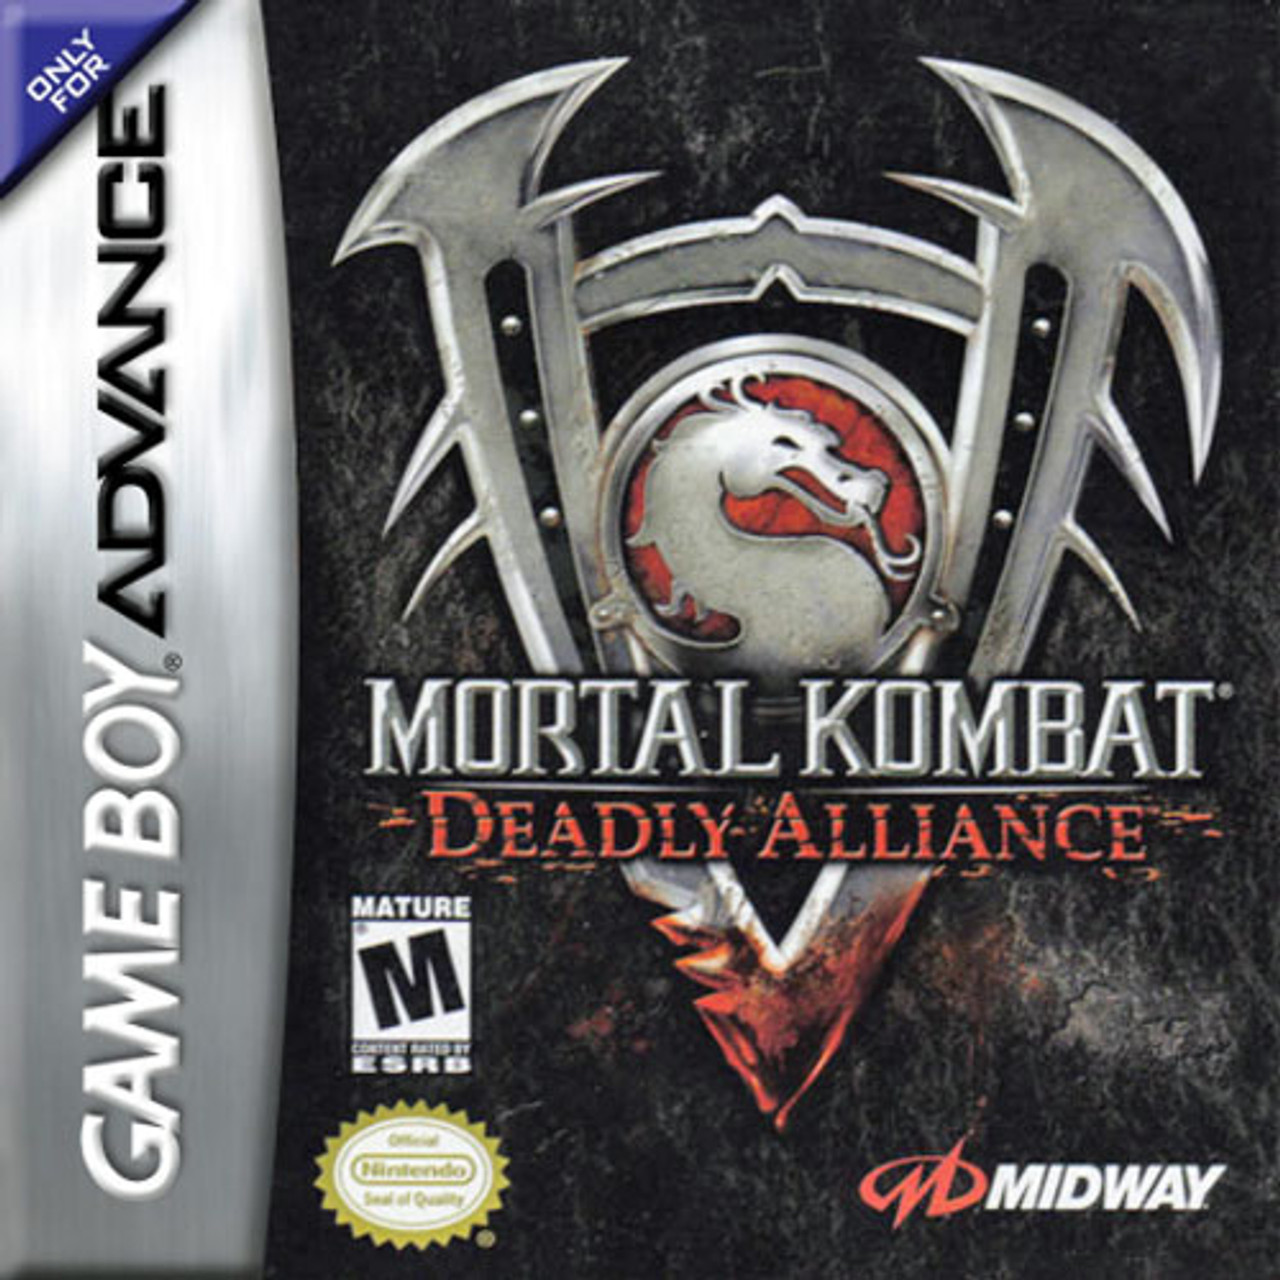 Mortal Kombat - Tournament Edition online multiplayer - gba